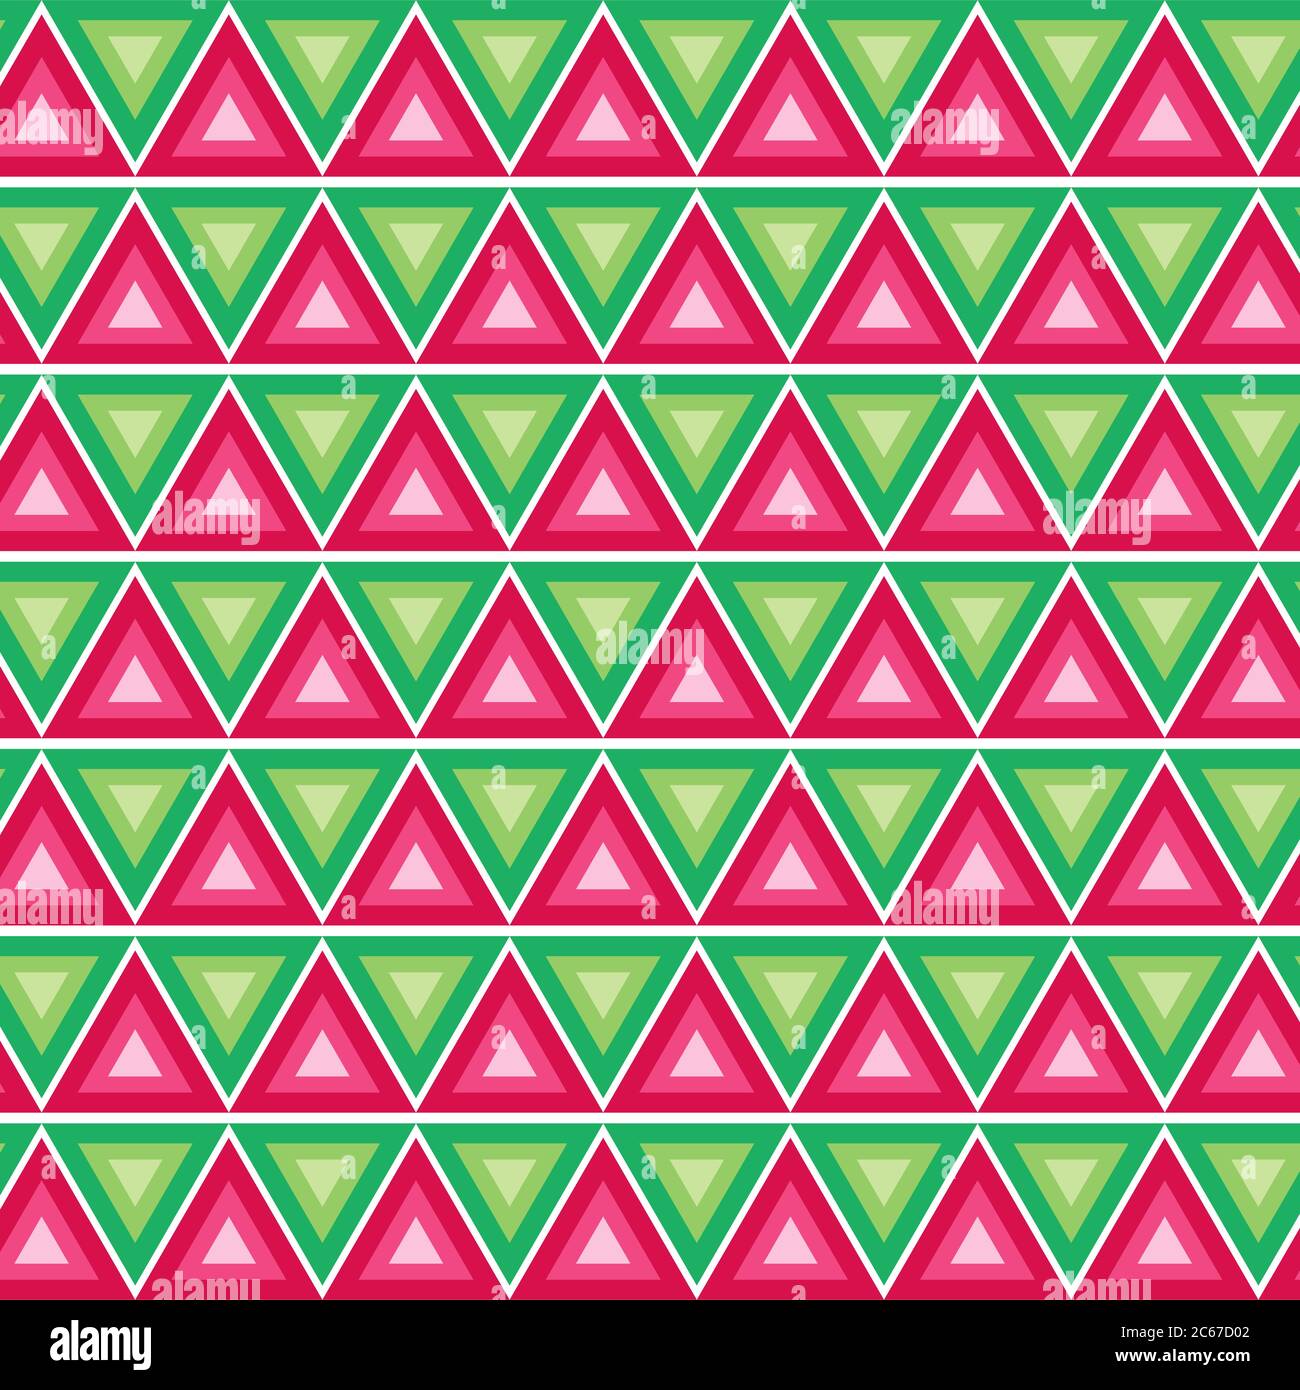 Sommerliches Muster. Wassermelone Textur buntes Design Vektor Illustration. Stock Vektor